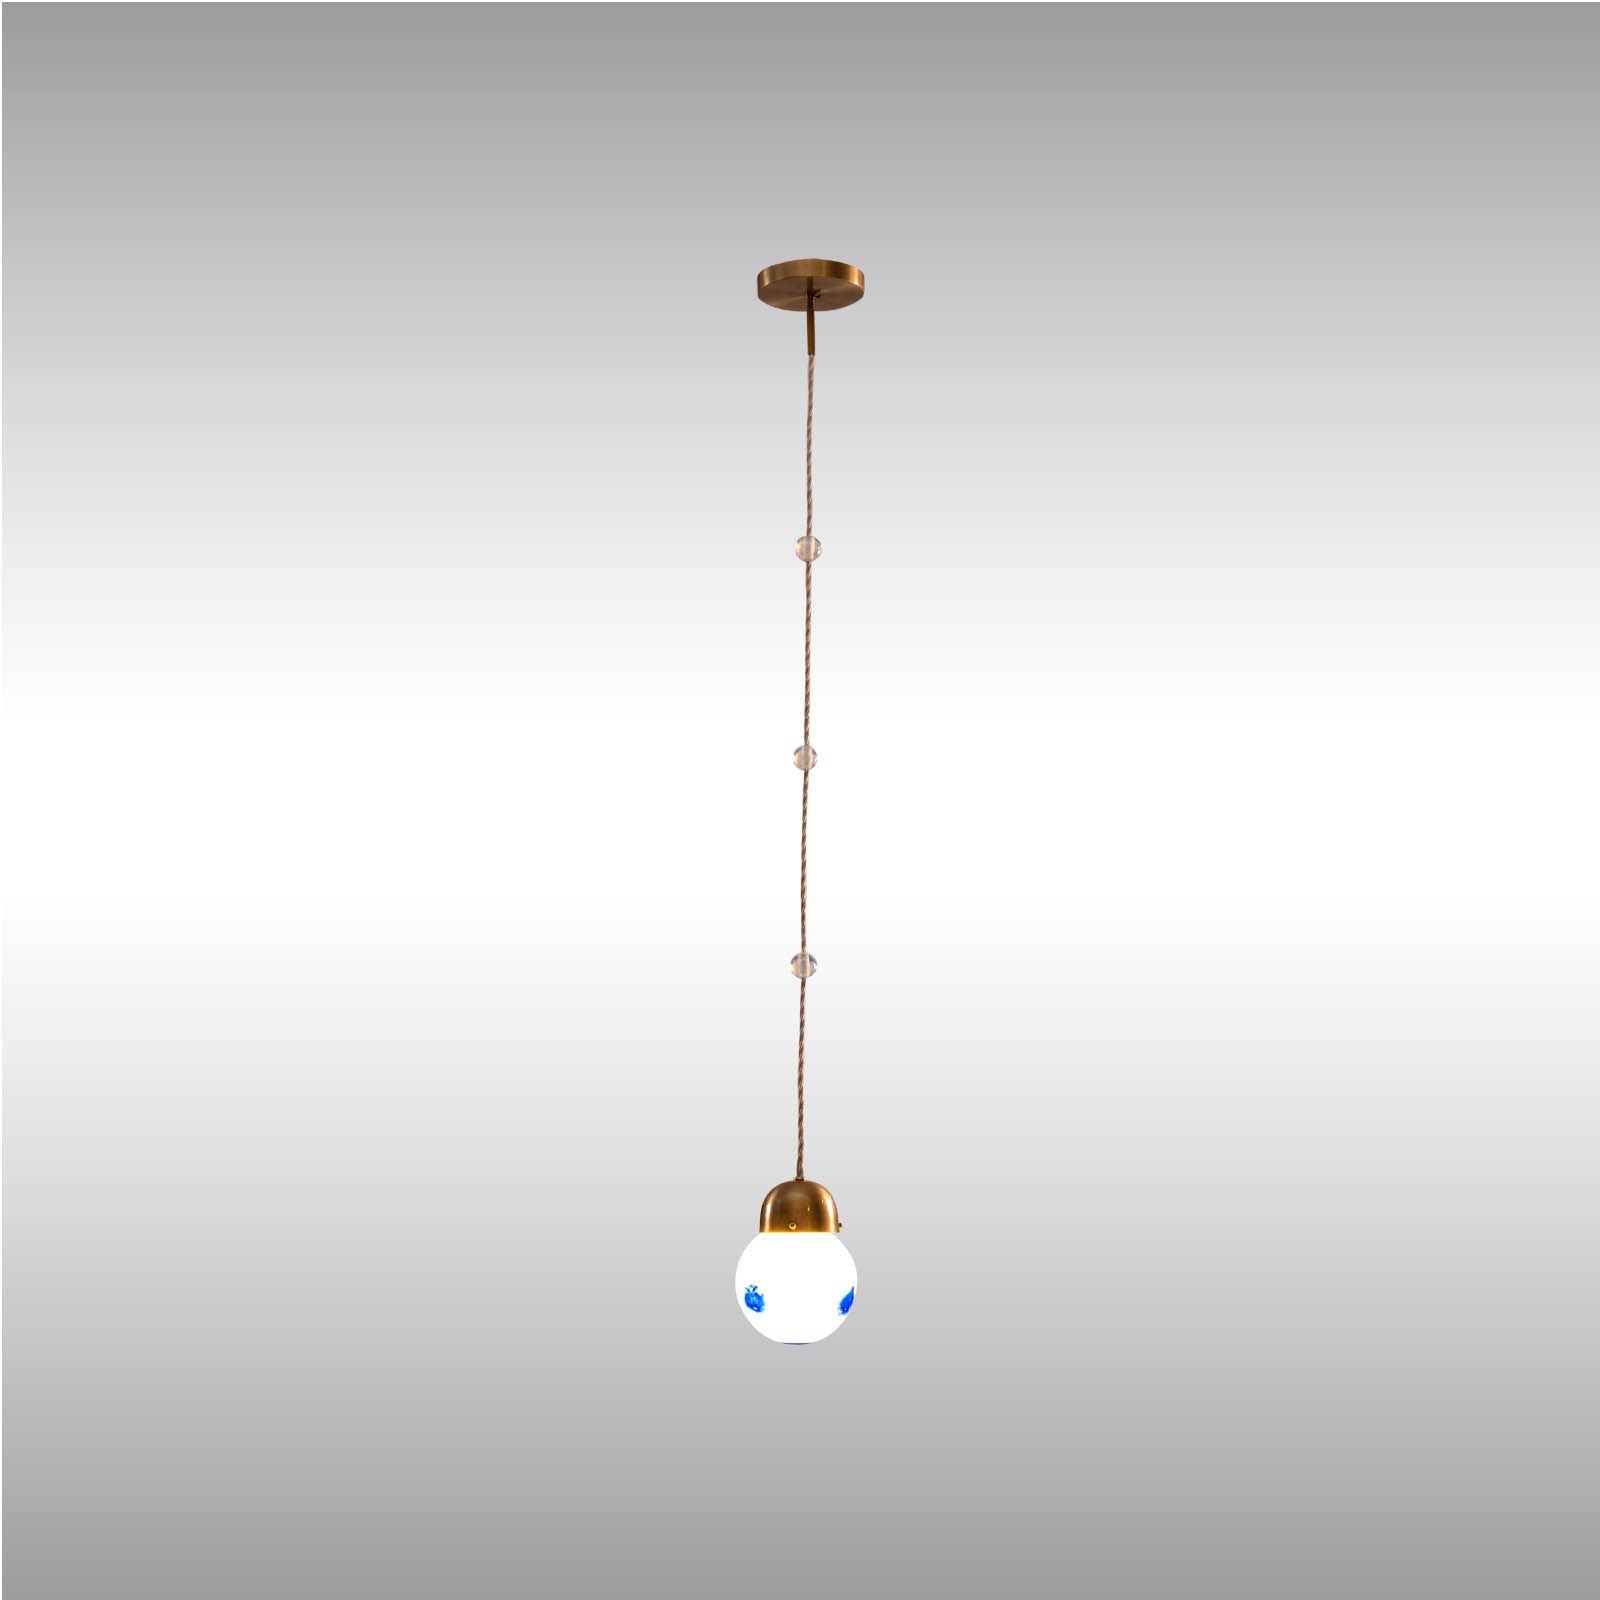 WOKA LAMPS VIENNA - OrderNr.: 21808|Kolo Moser and Josef Hoffmann Pendant - Design: Josef Hoffmann